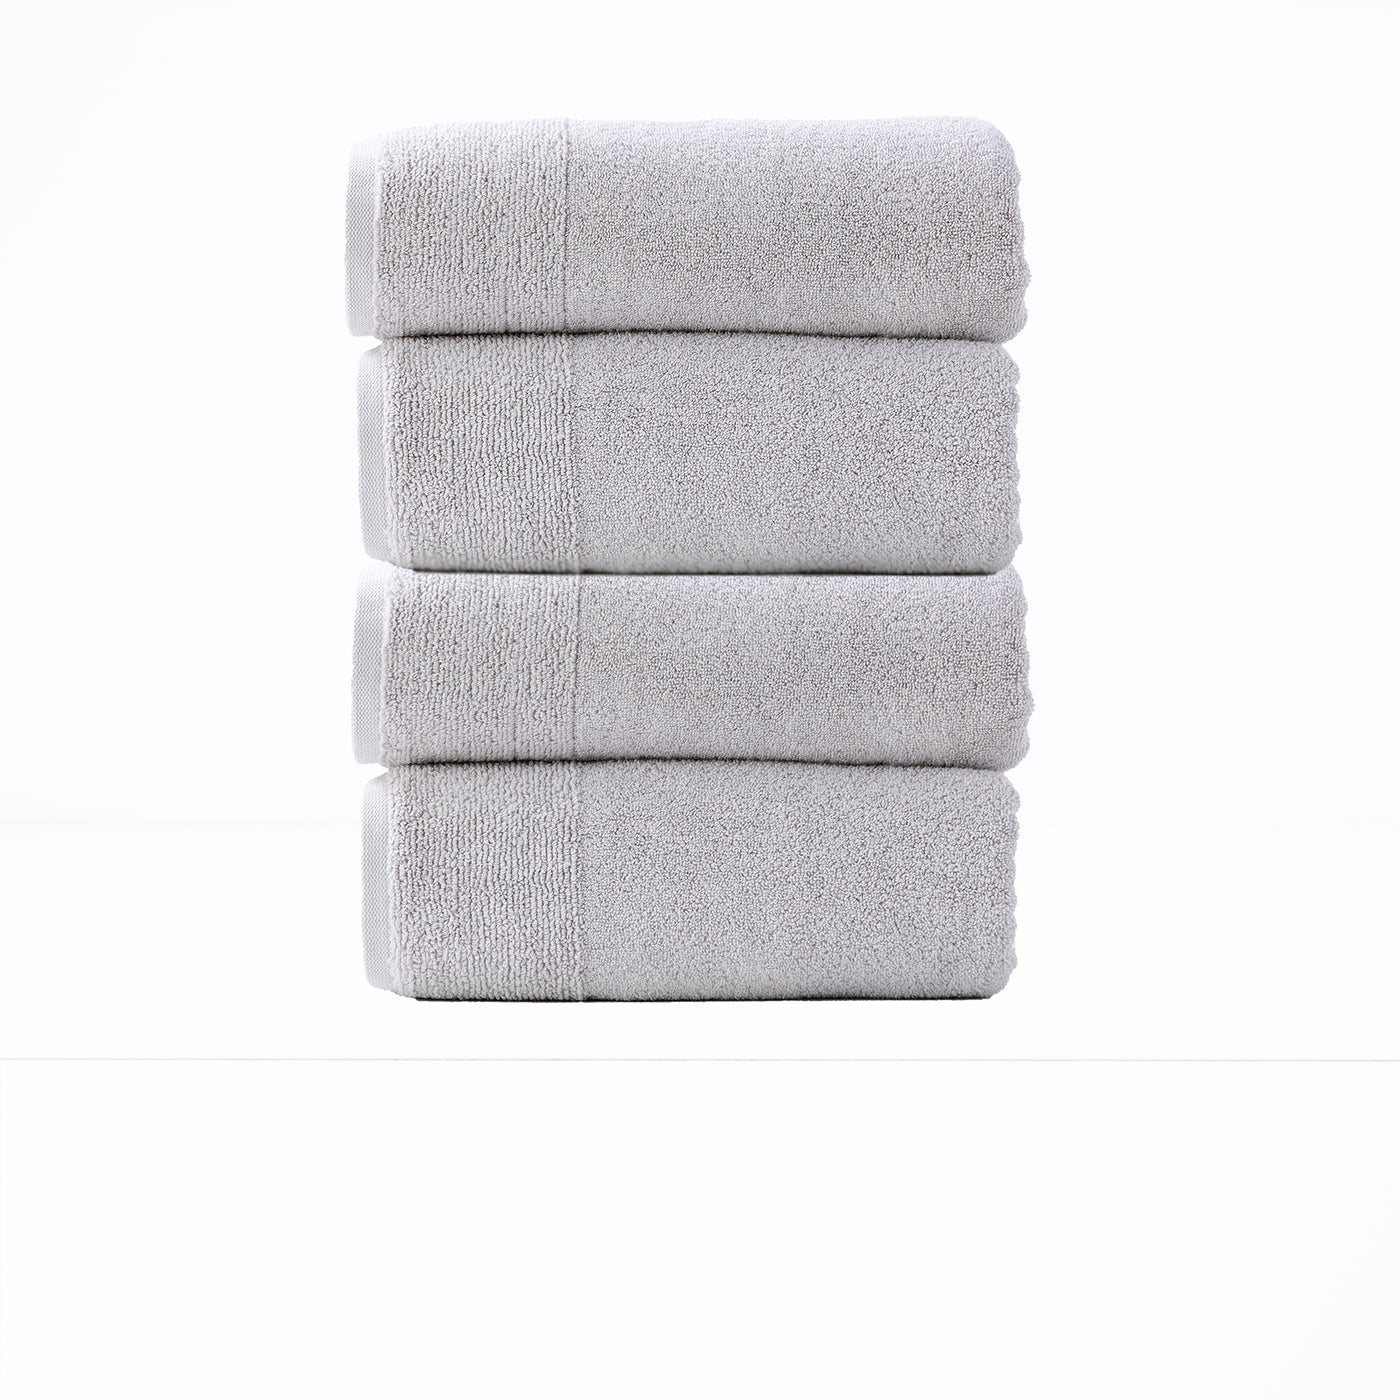 quick dry bath towels- bath towels-best bath towels australia-bath towels-bath towels on sale-luxury bath towels-colourful bath towels- bath towel sets-bath towel set-afterpay-free shipping-free post-australia- new Zealand.